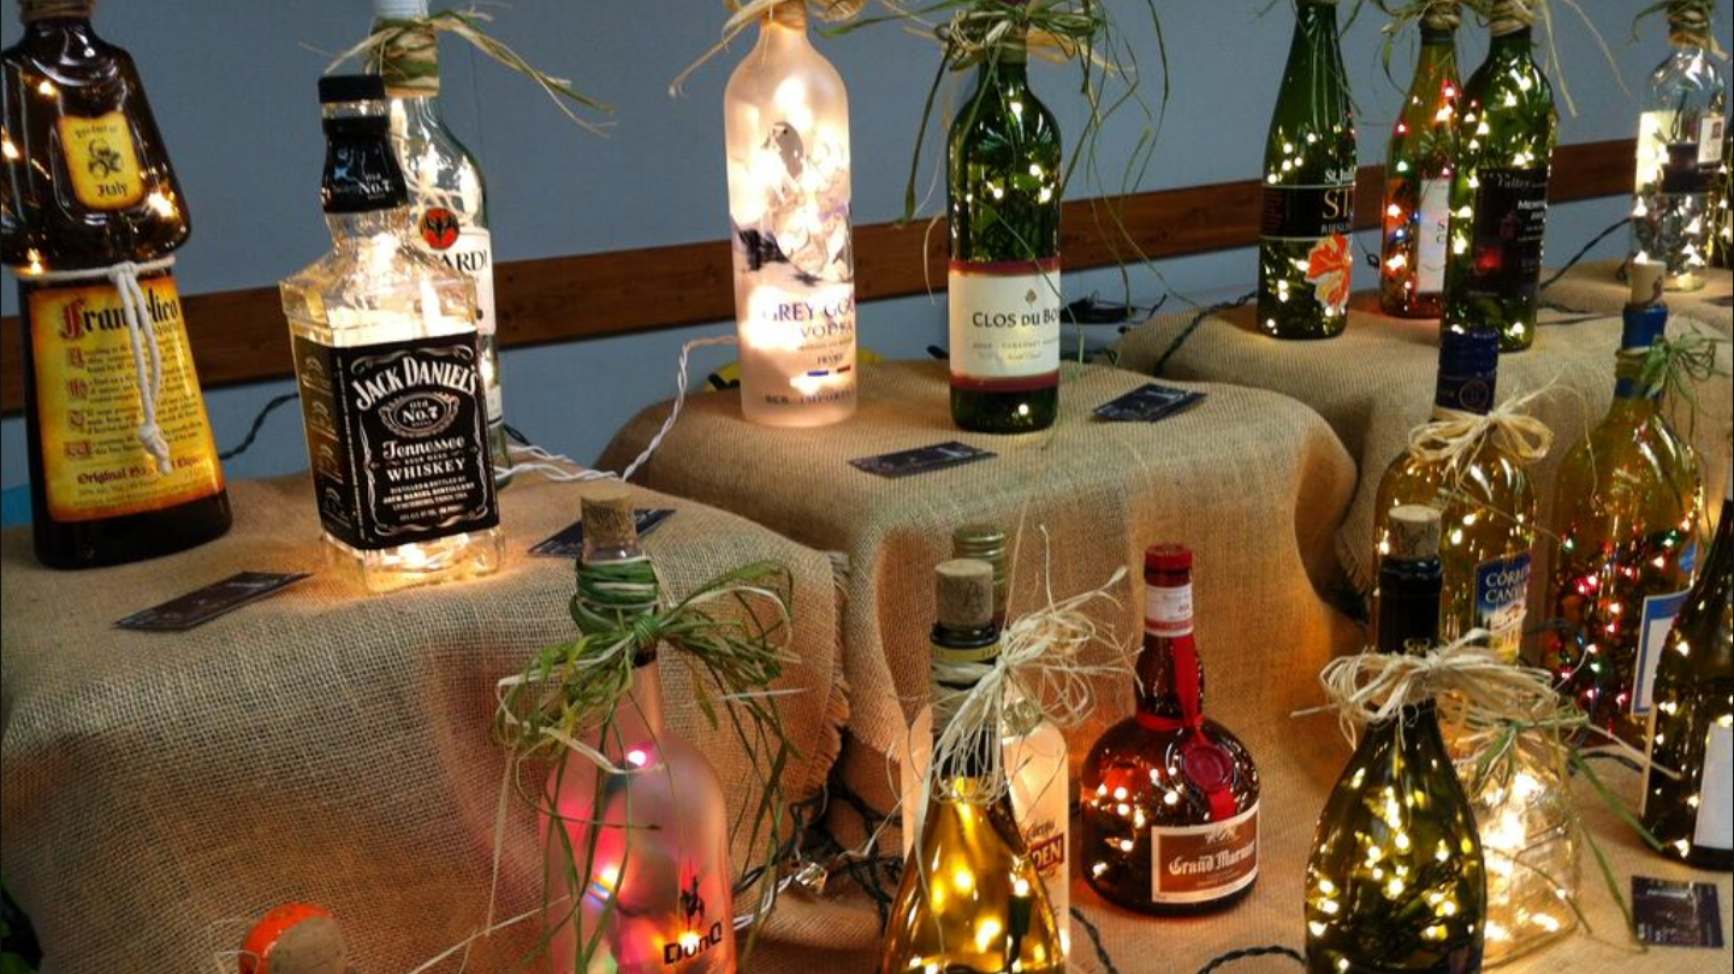 Get This Look: DIY Lighted Wine Bottles